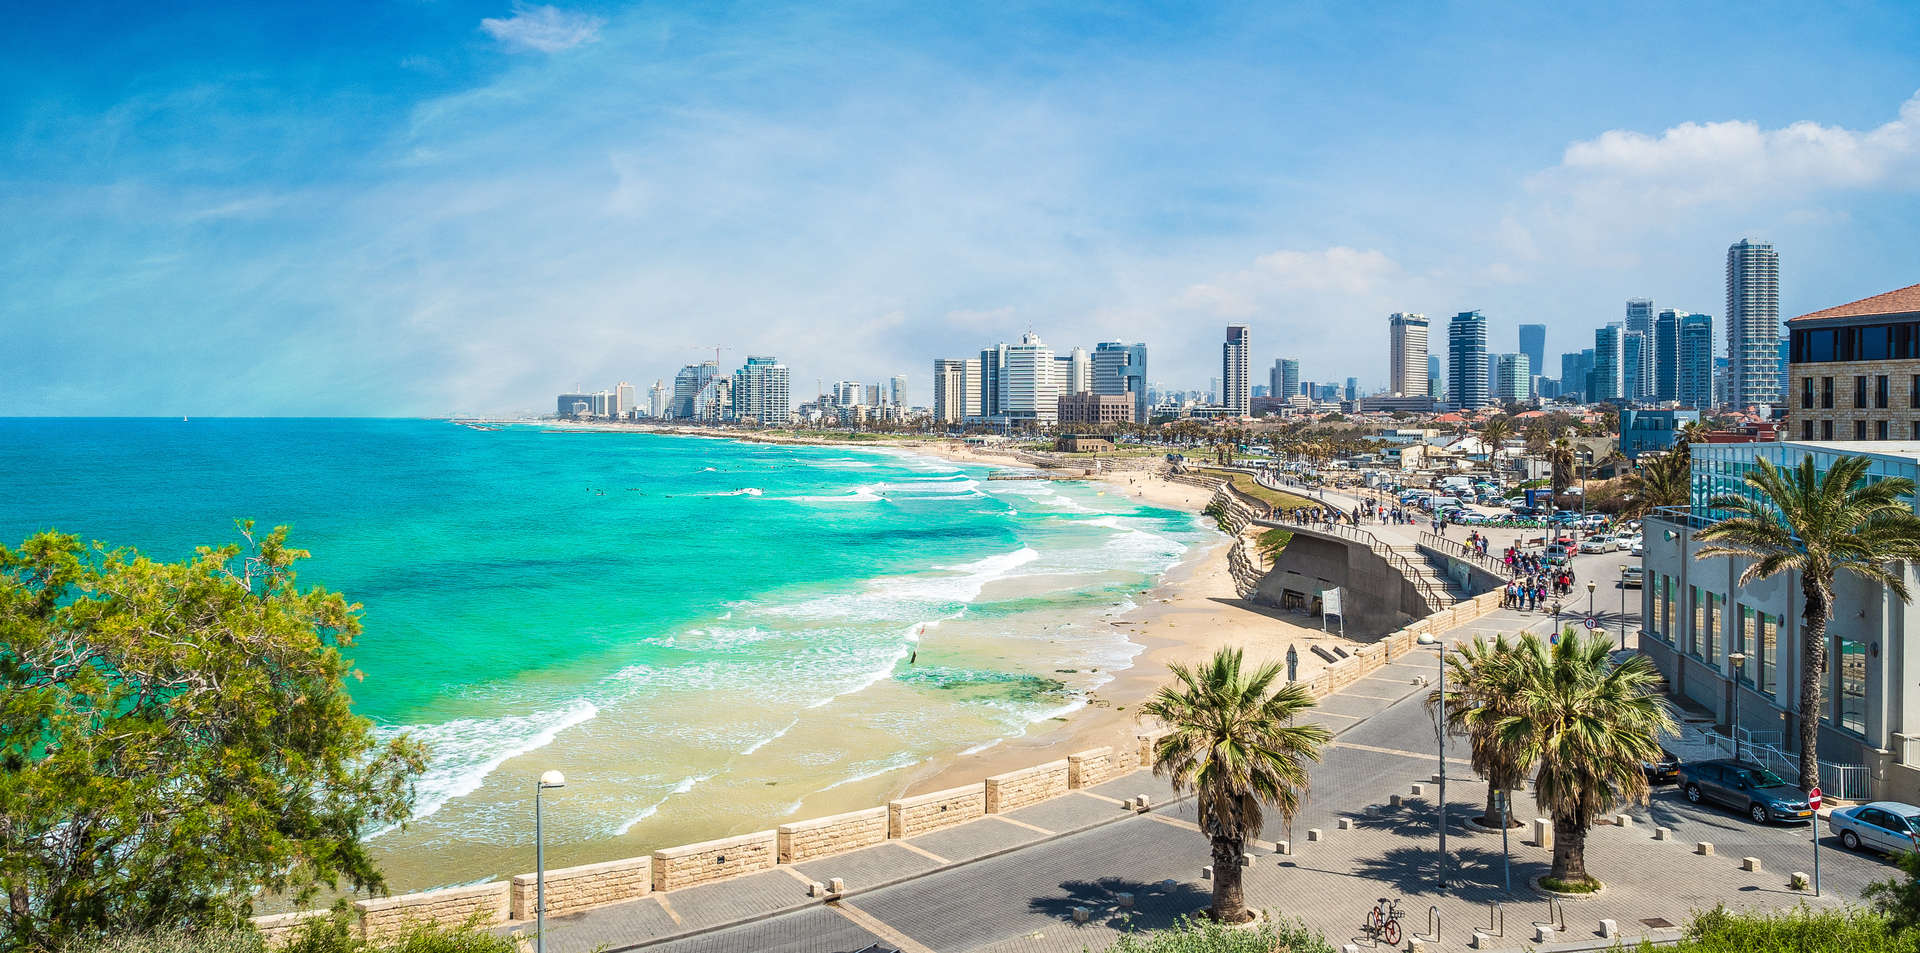 Jaffa, Tel Aviv's beach